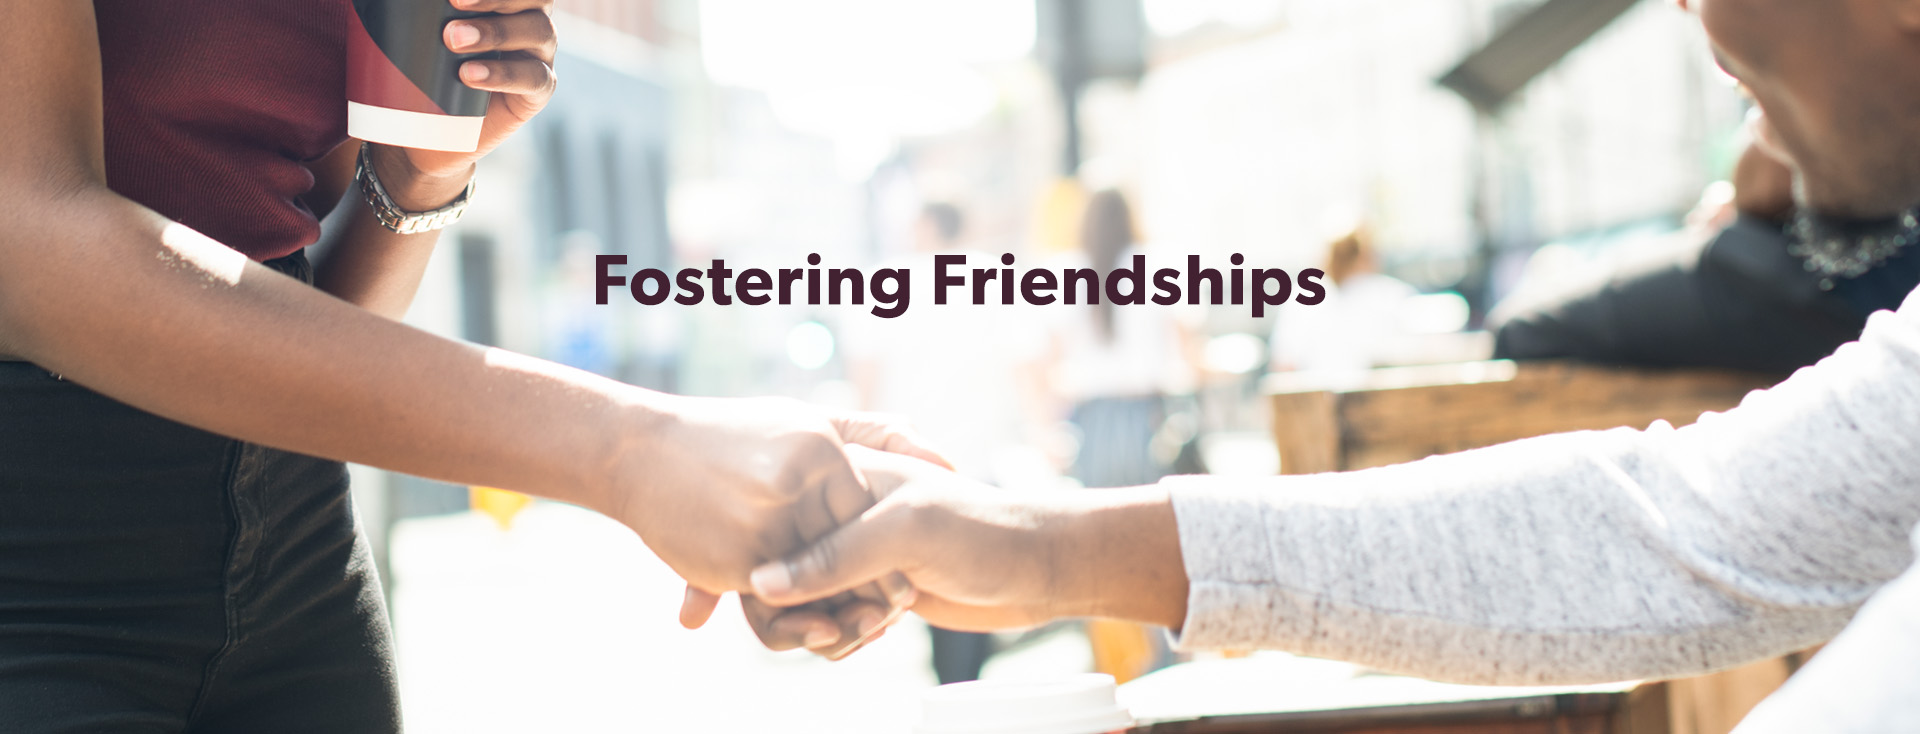 Fostering Friendships